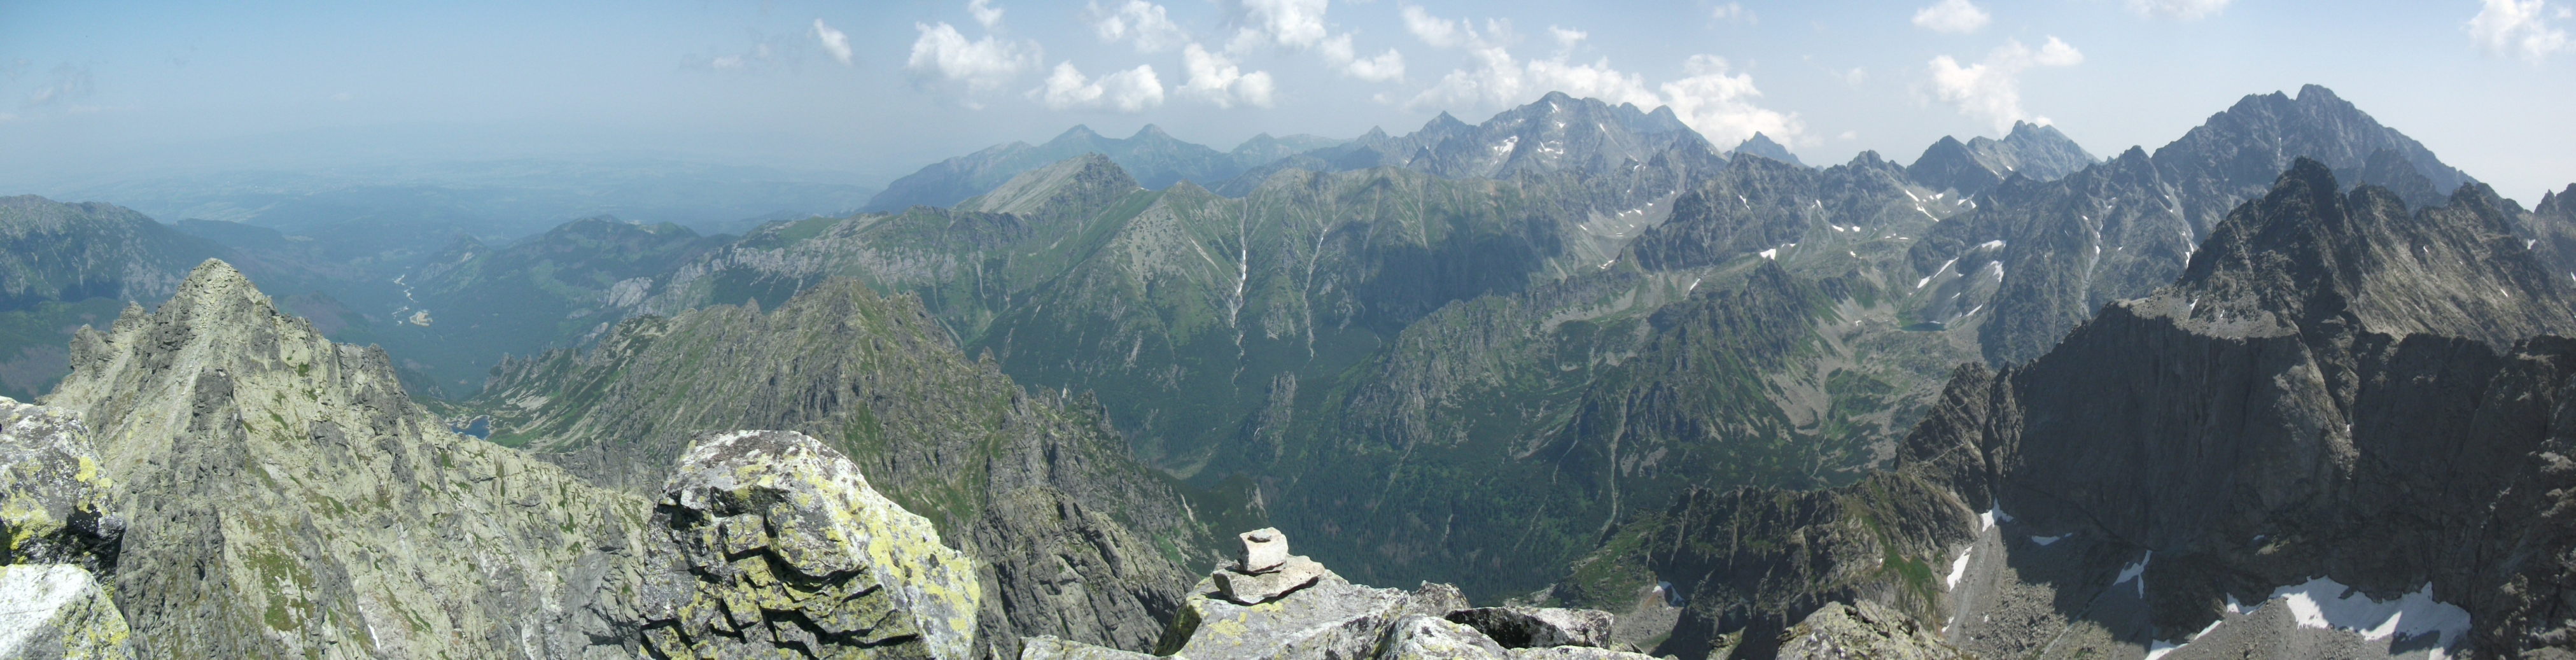 panorama-Tatr-z-Rysow.JPG